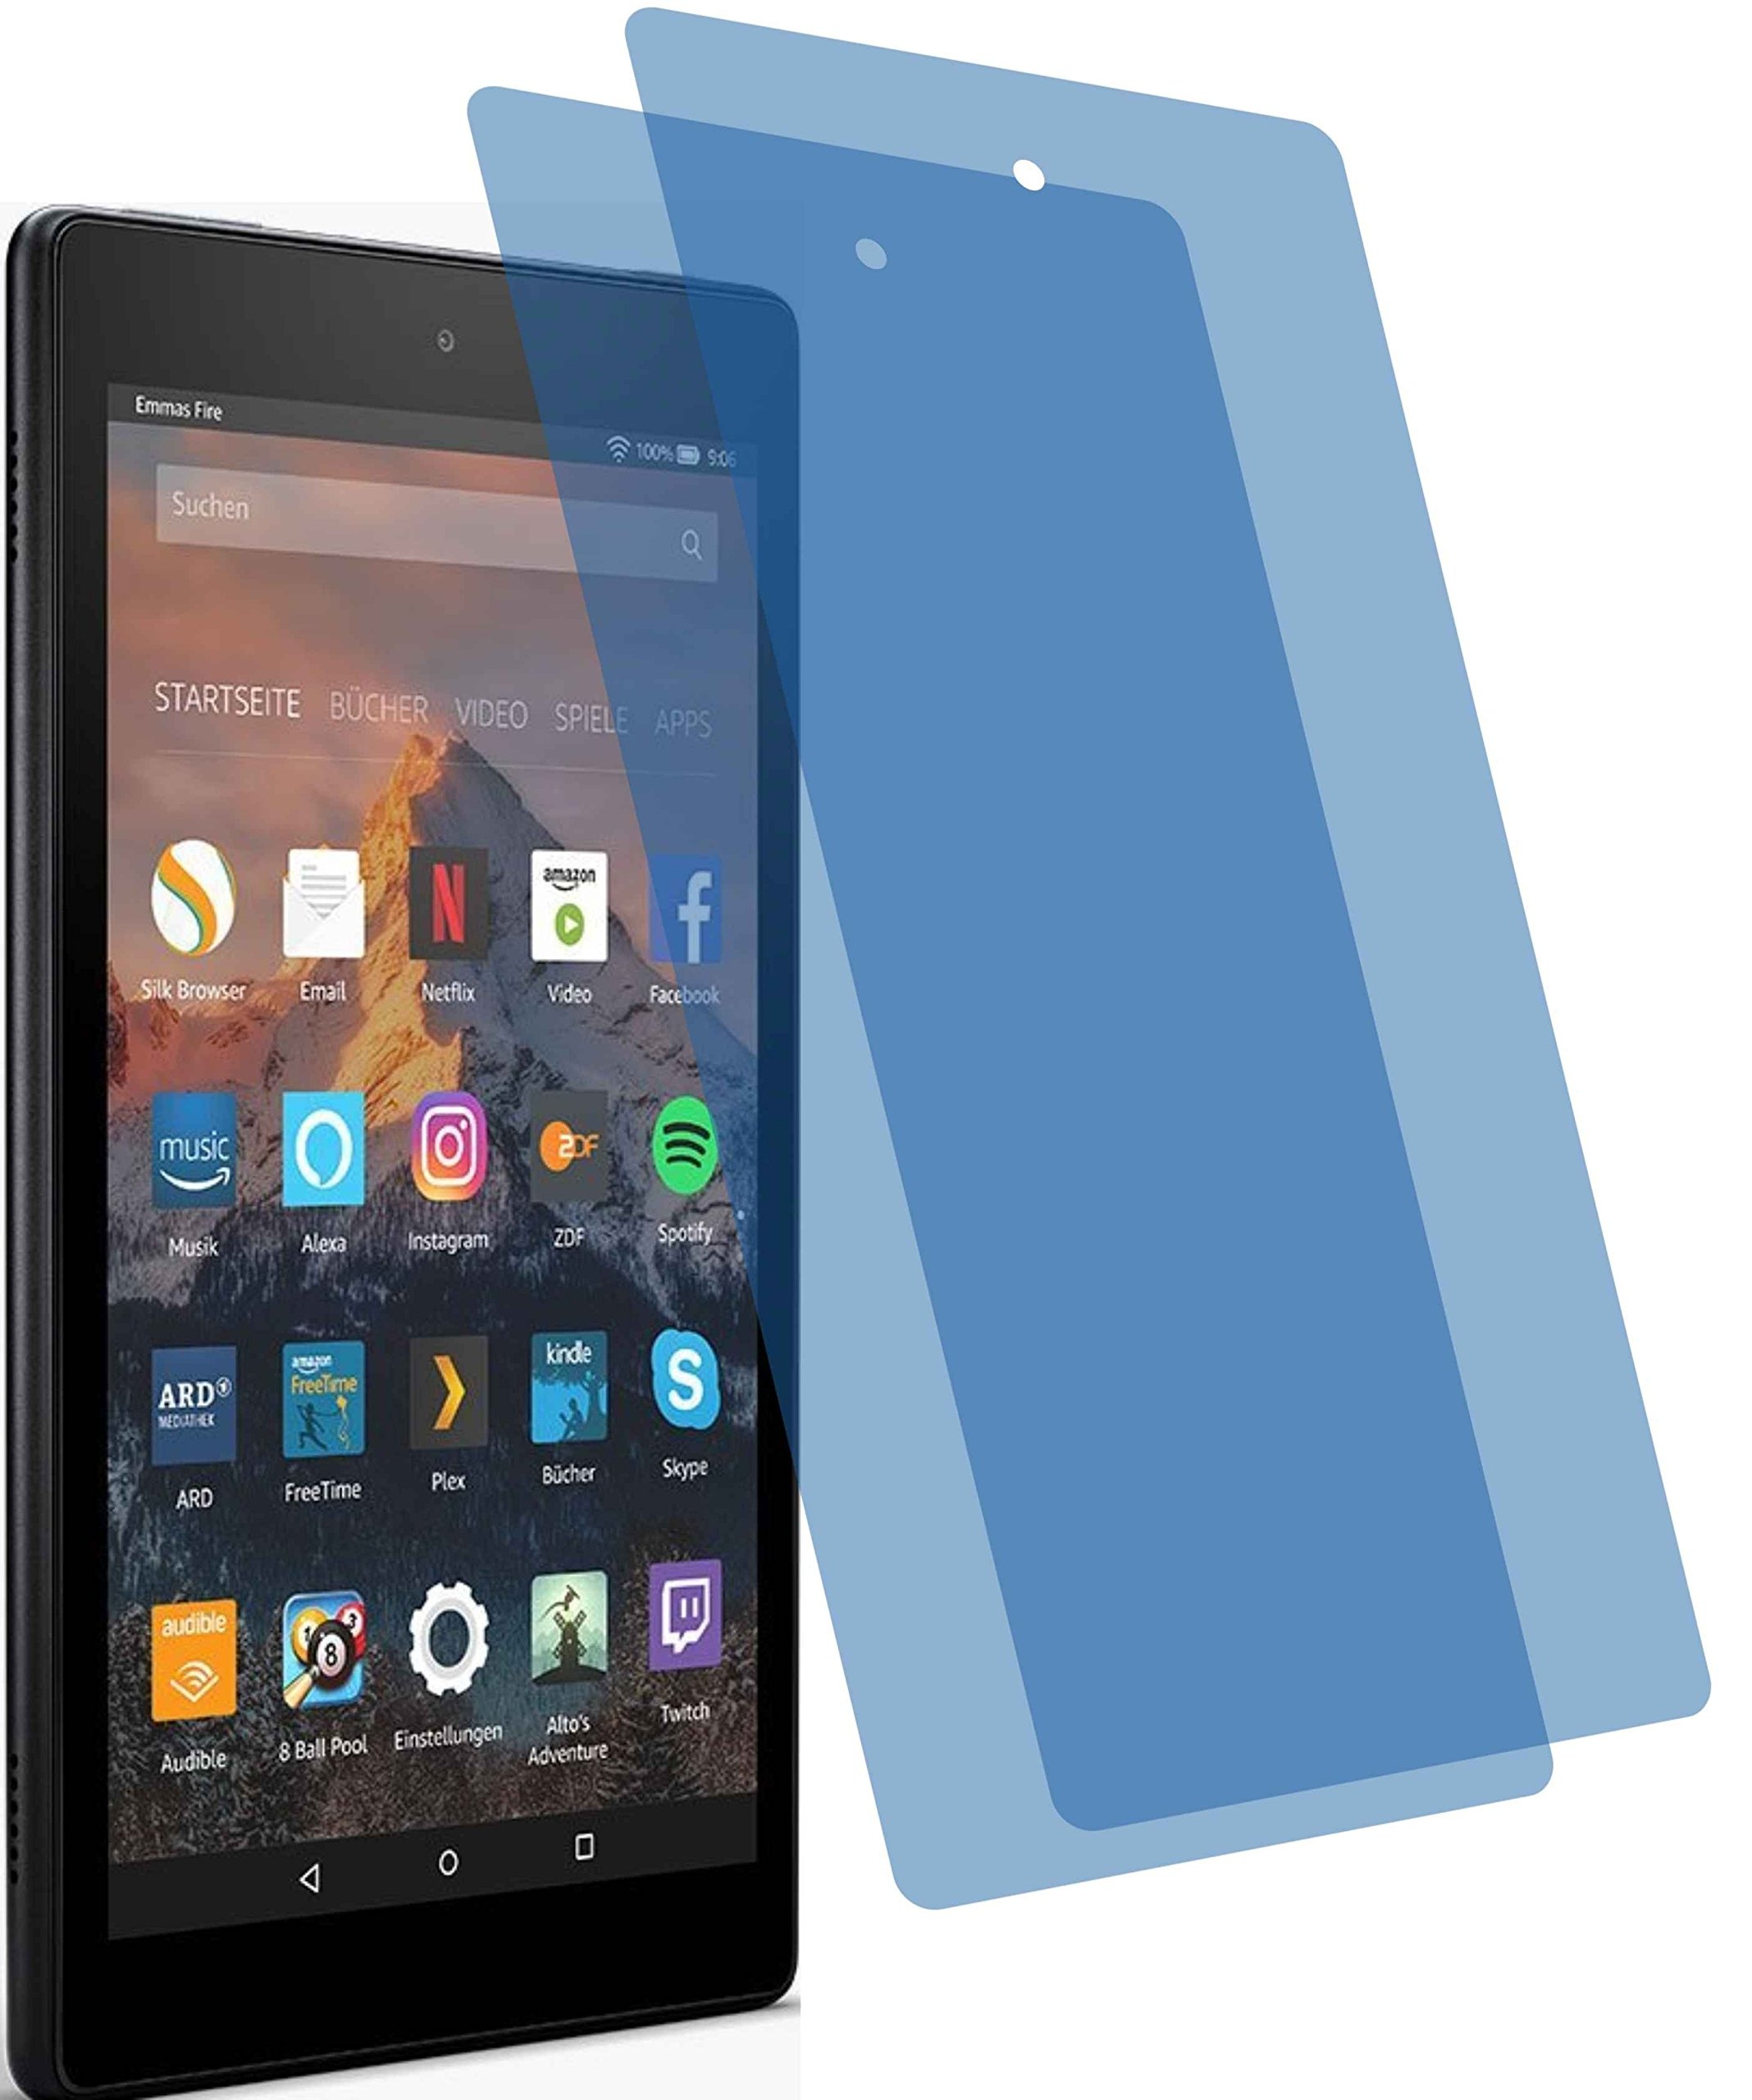 4ProTec I 2X Crystal Clear klar Schutzfolie für Amazon Fire HD 8-Tablet 7. Generation 2017 Premium Displayschutzfolie Bildschirmschutzfolie Schutzhülle Displayschutz Displayfolie Folie